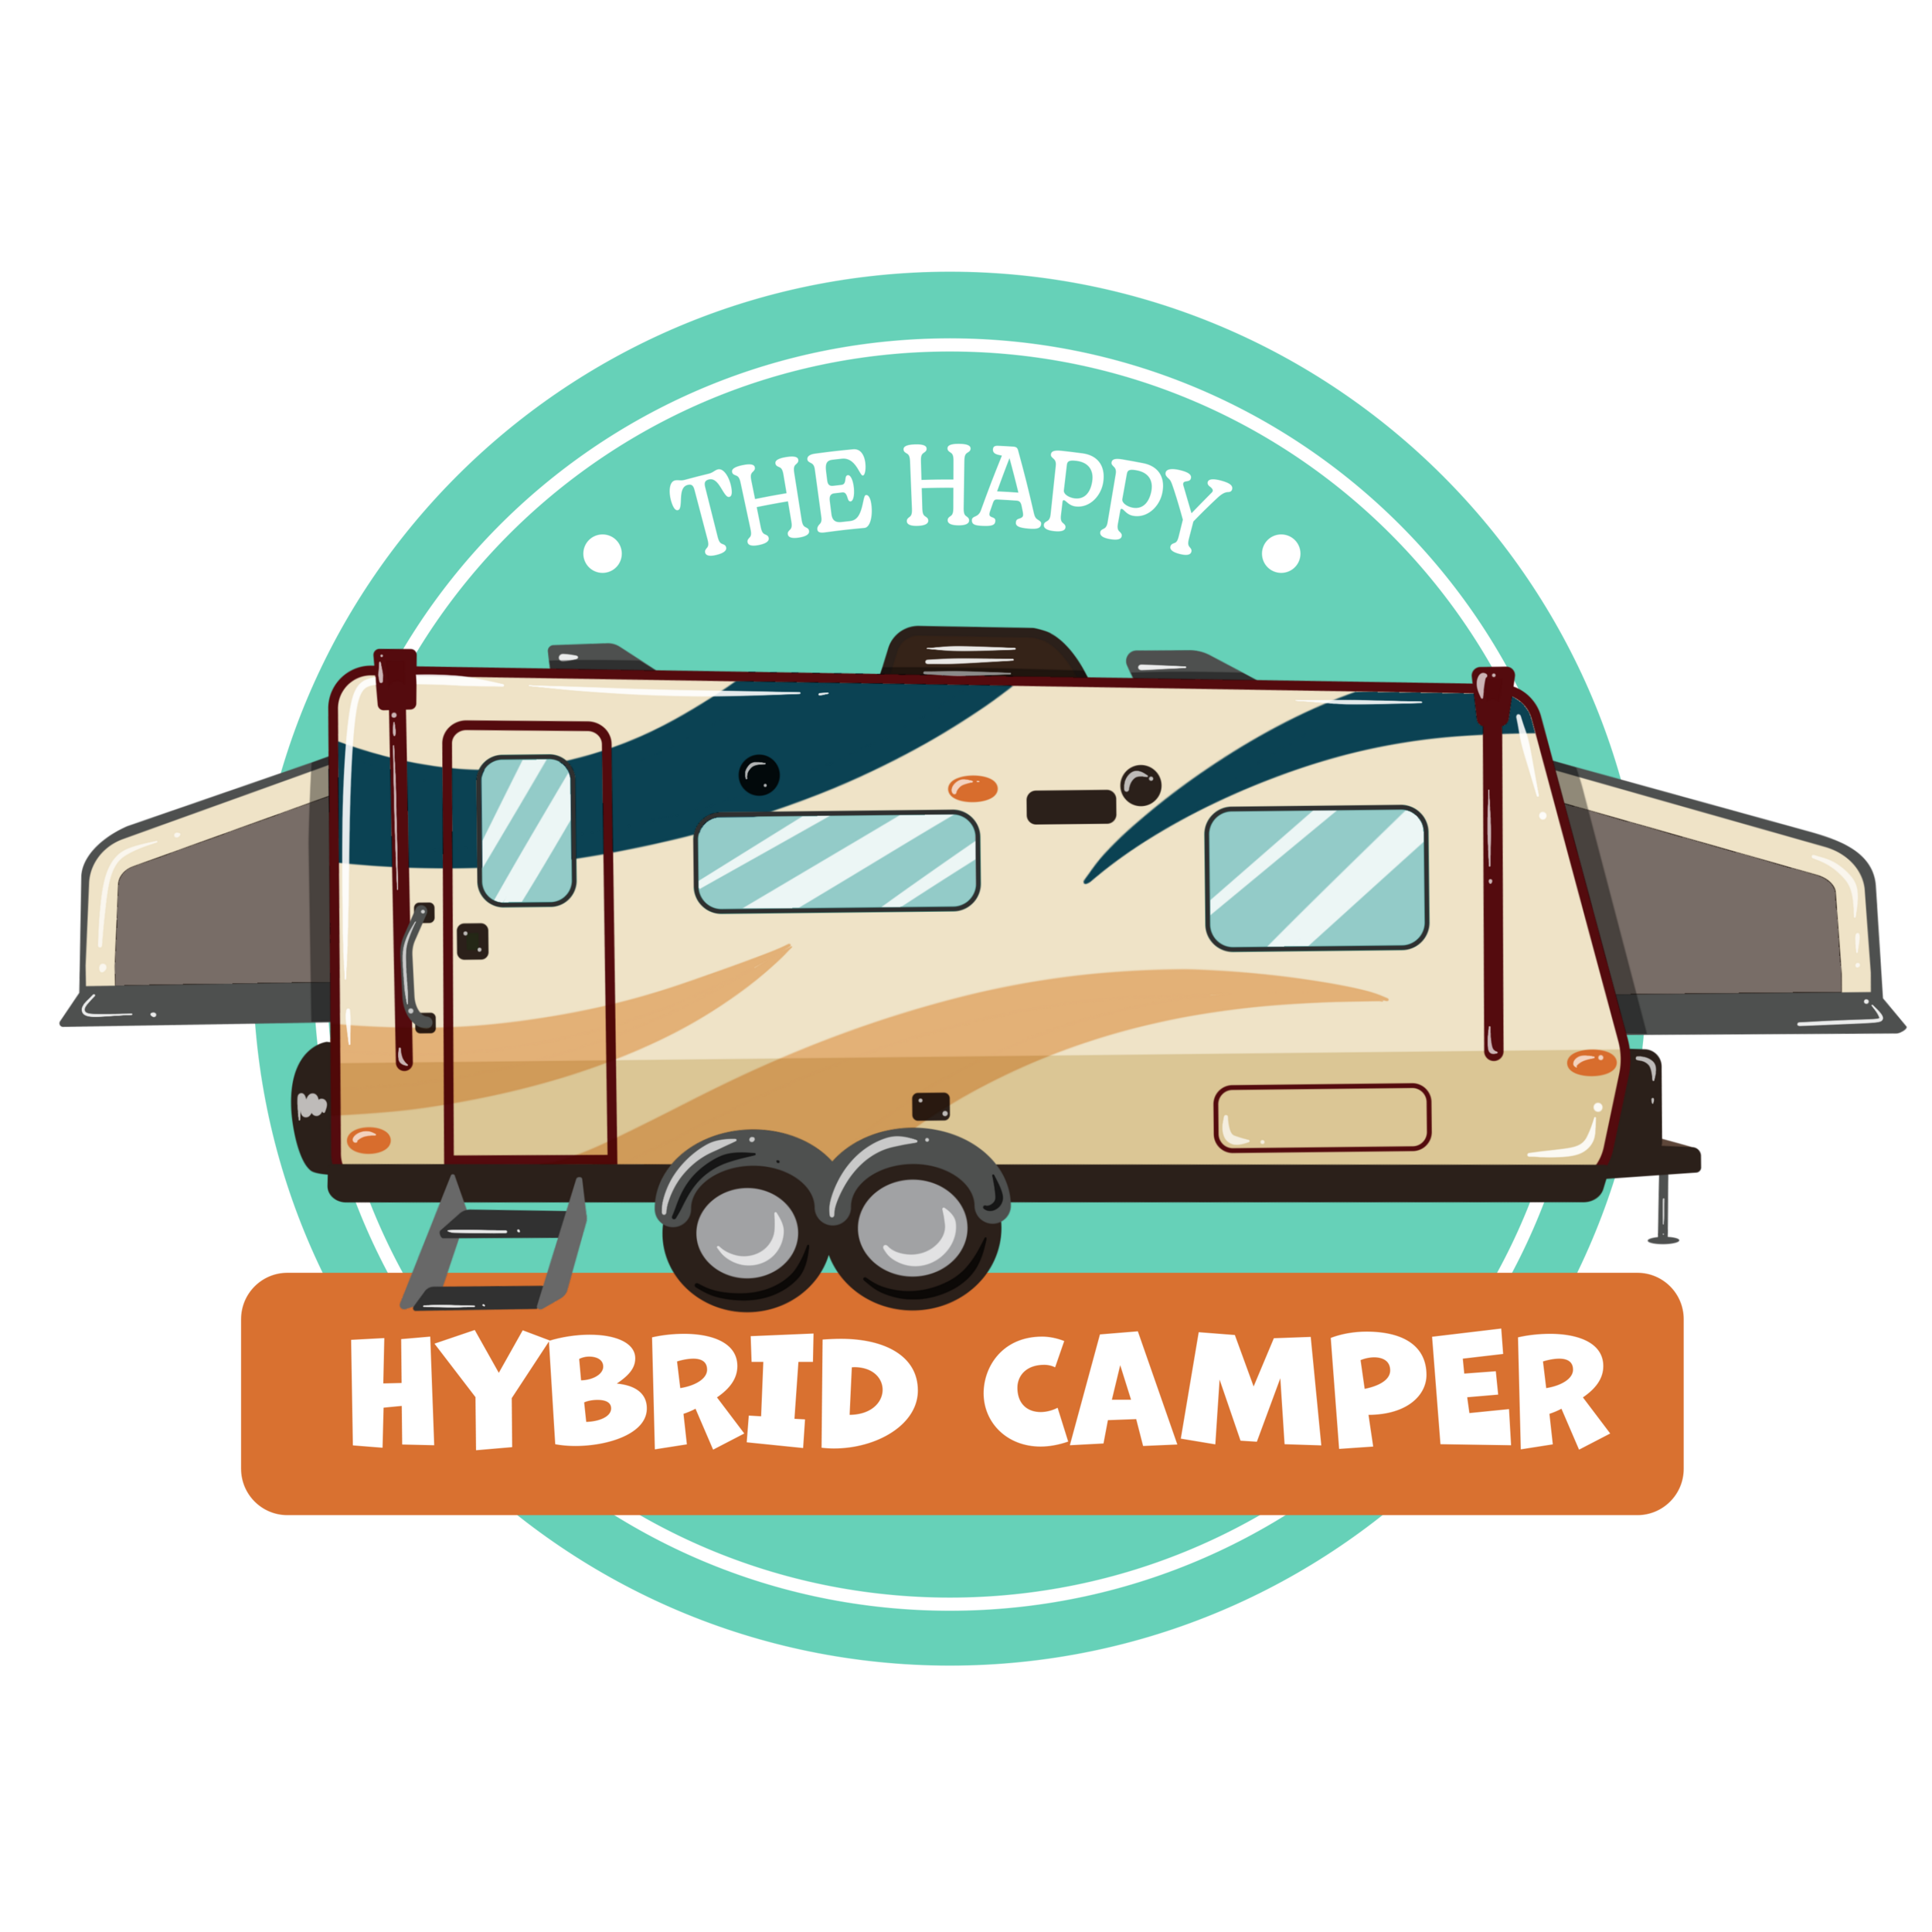 The Happy Hybrid Camper